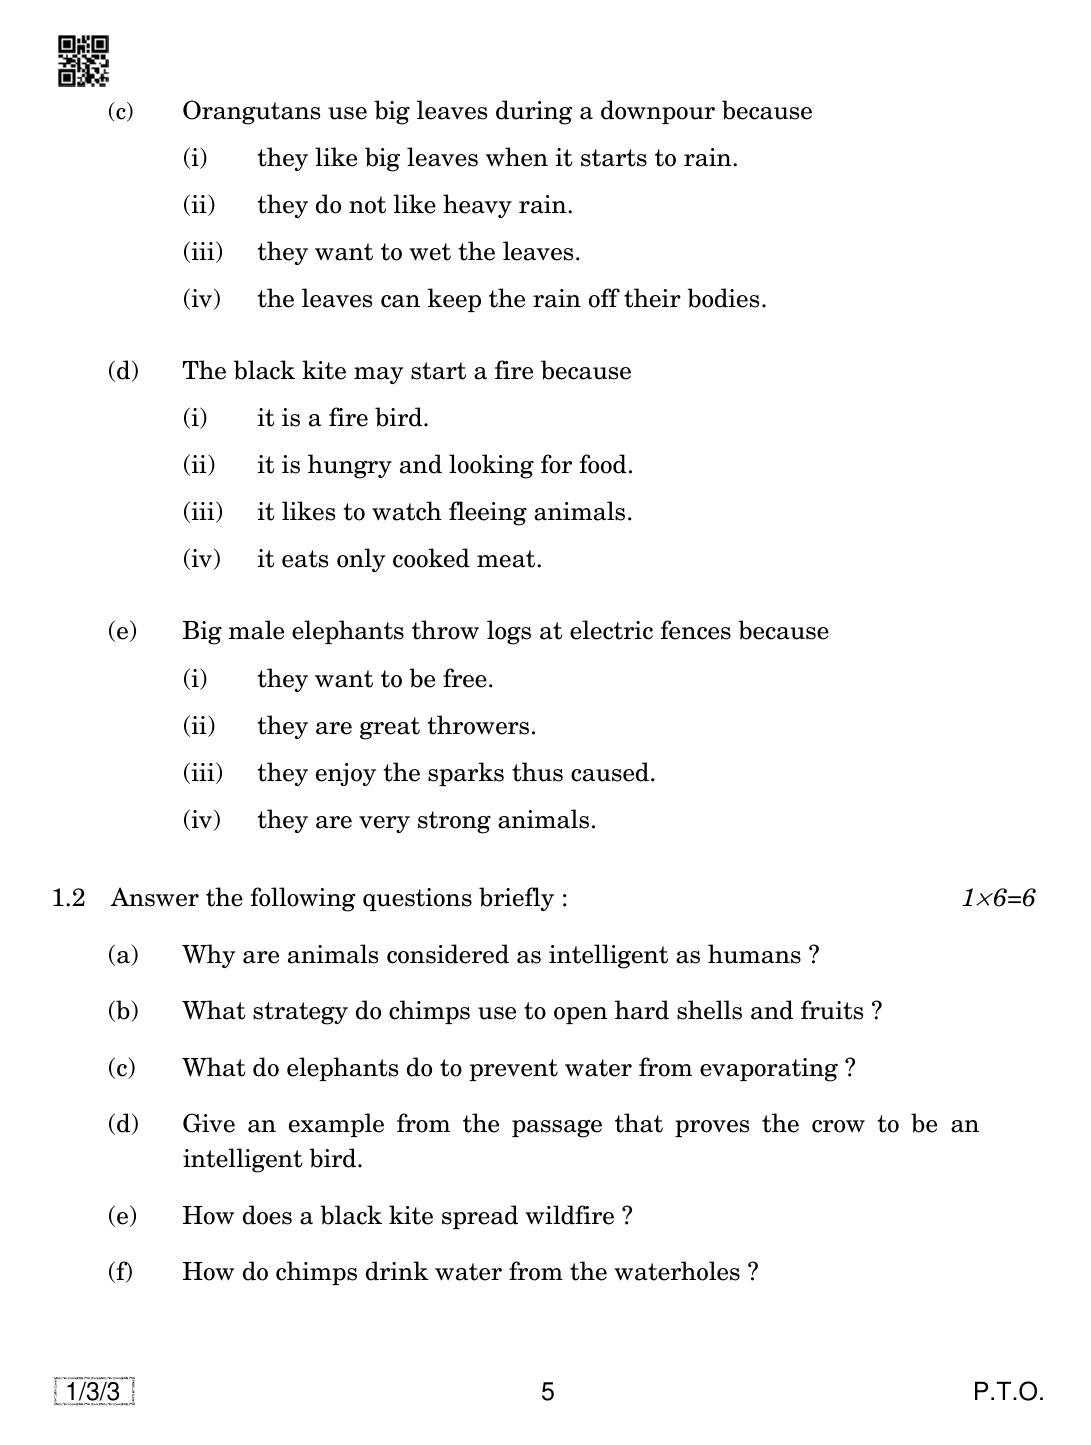 CBSE Class 12 1-3-3 English Core 2019 Question Paper - Page 5